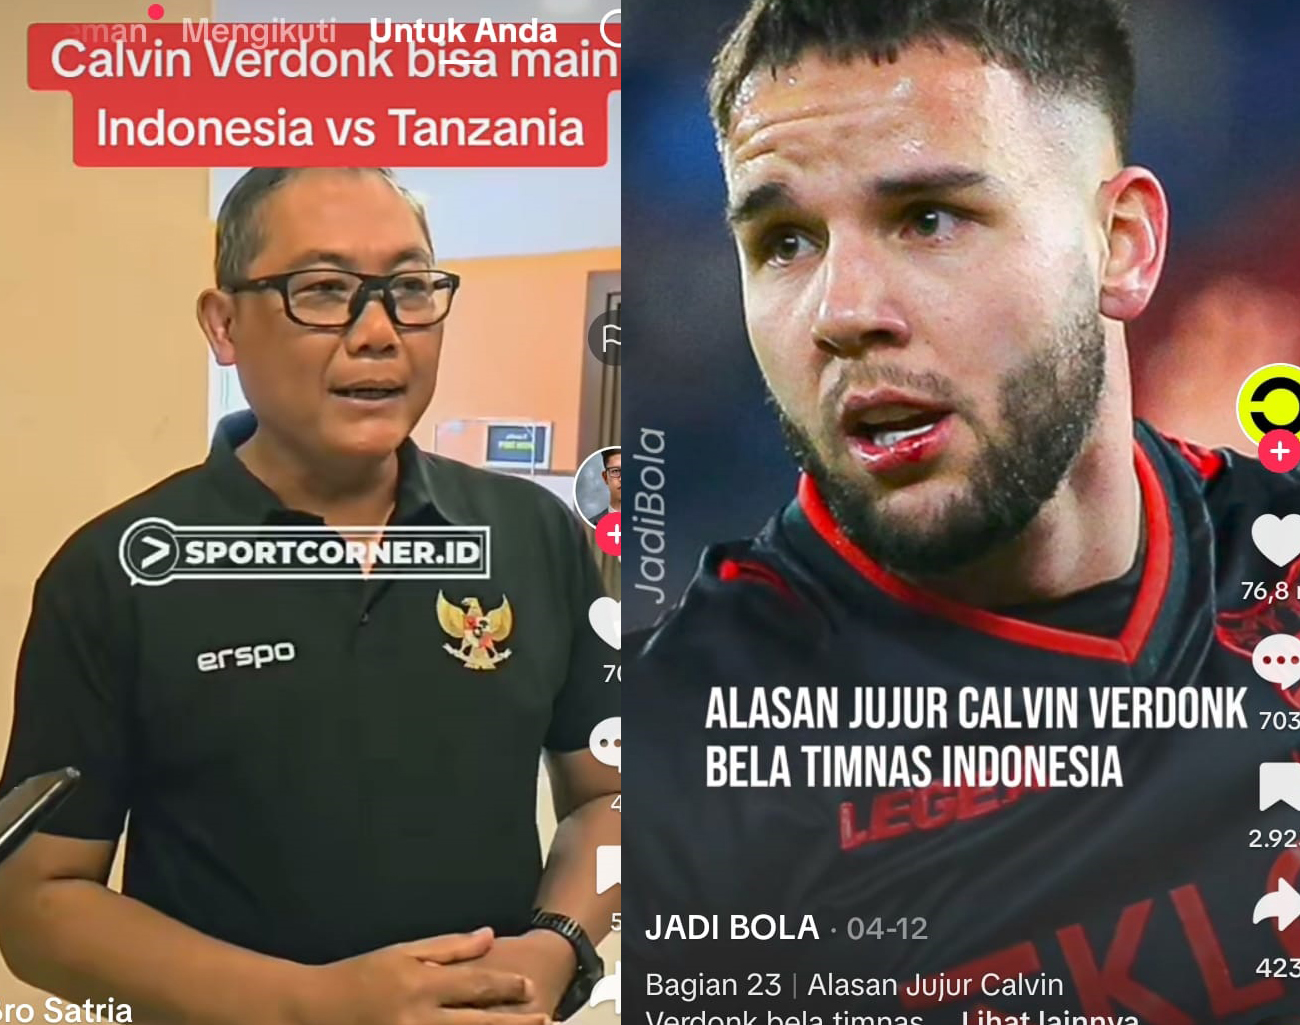 PSSI Pemain Anyar Belanda Calvin Verdonk Main Bela Timnas Indonesia vs Tanzania, Jelang Kualifikasi Piala Duni